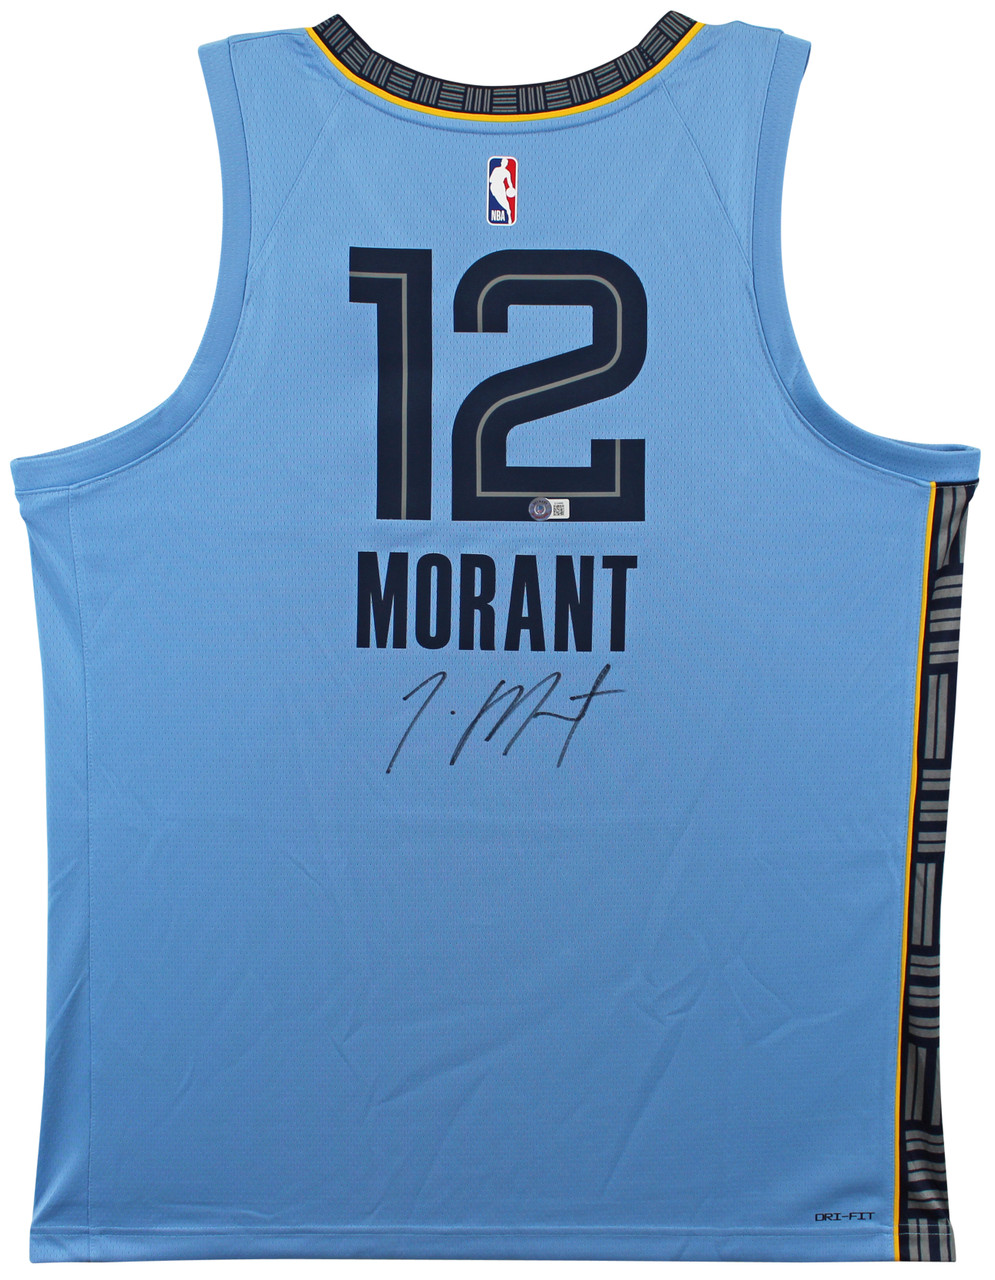 Ja Morant Autographed Memphis Grizzlies White Nike Swingman Jersey